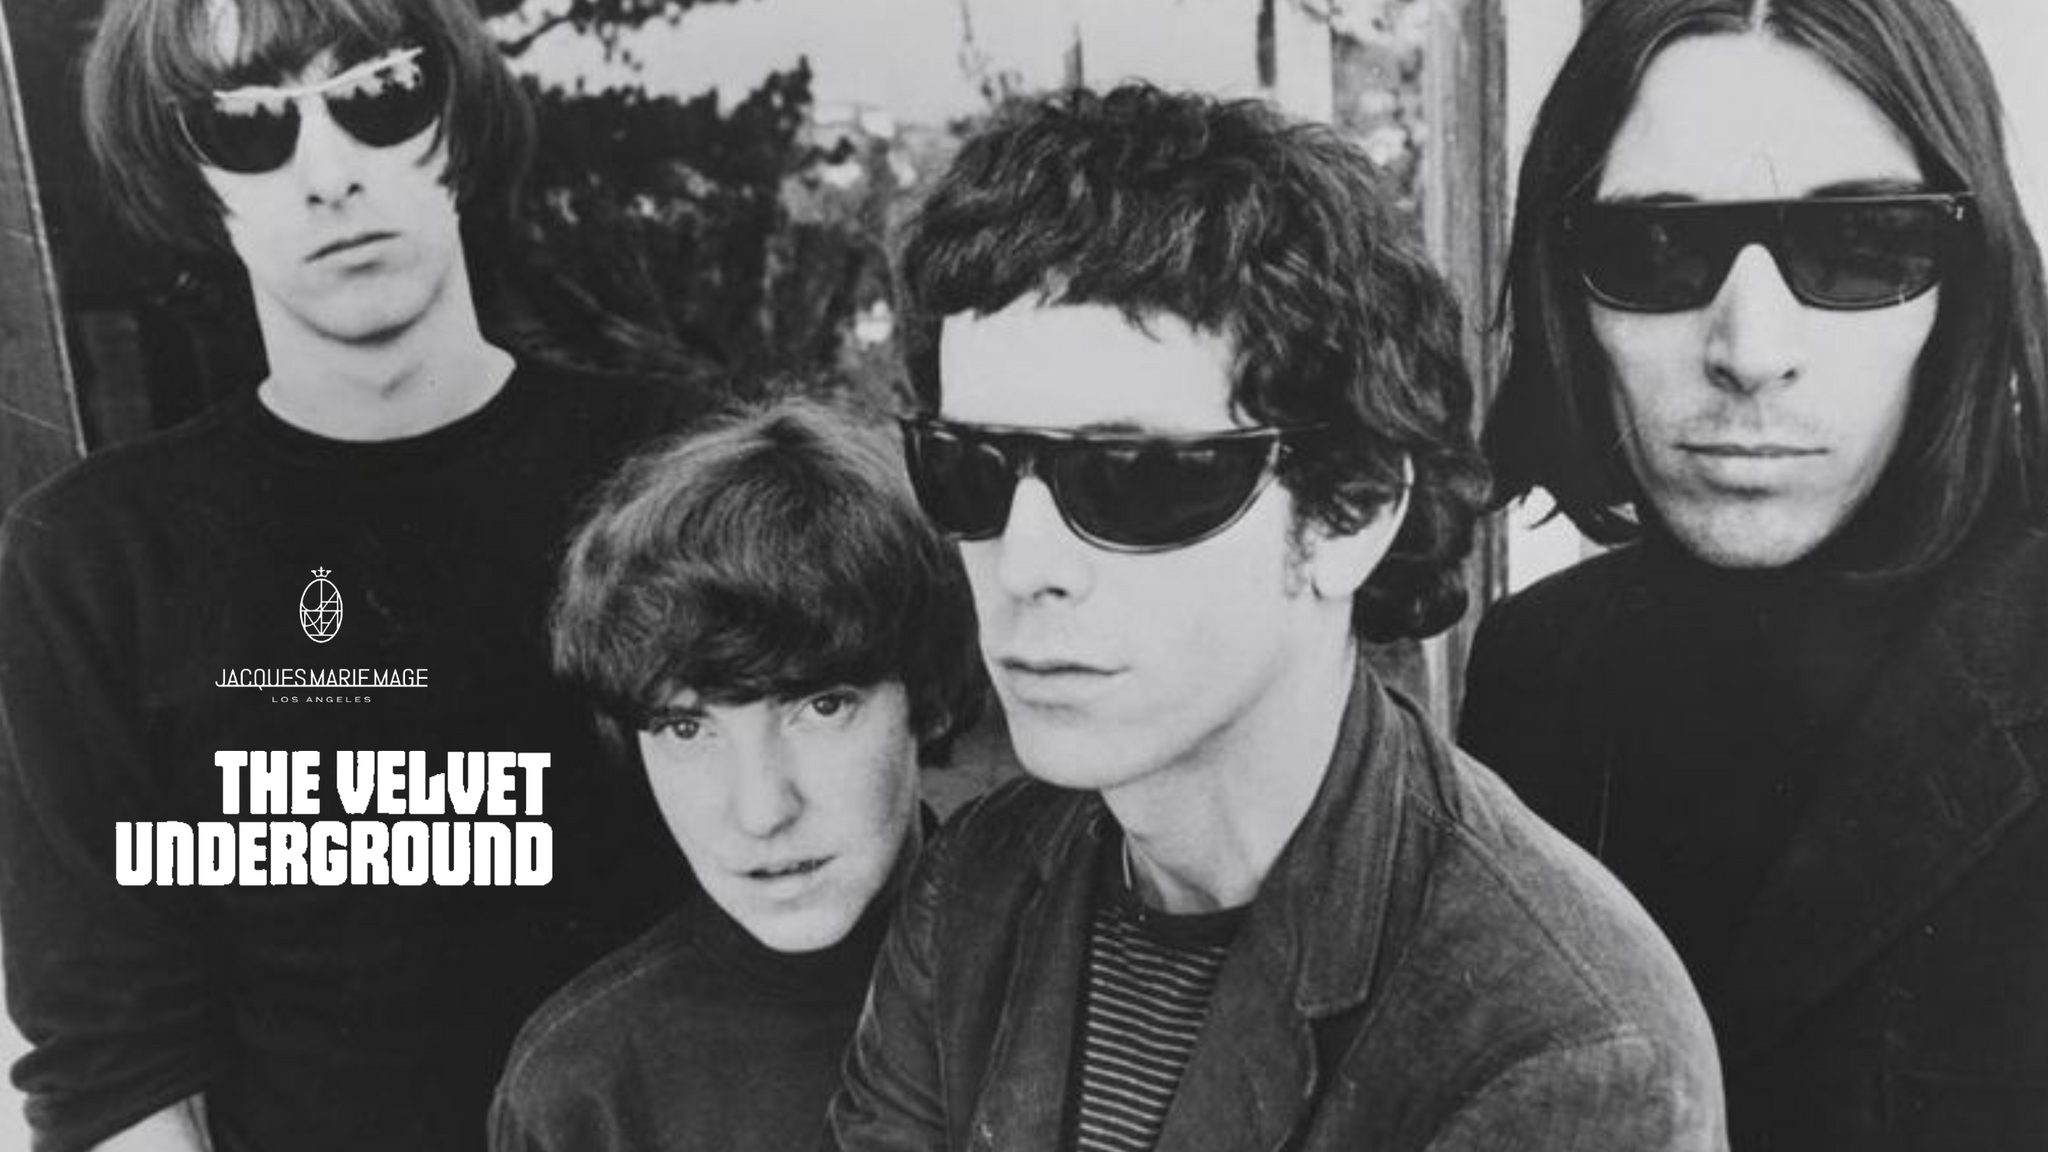 Jacques Marie Mage X The Velvet Underground - 'Vicious' kollektionen